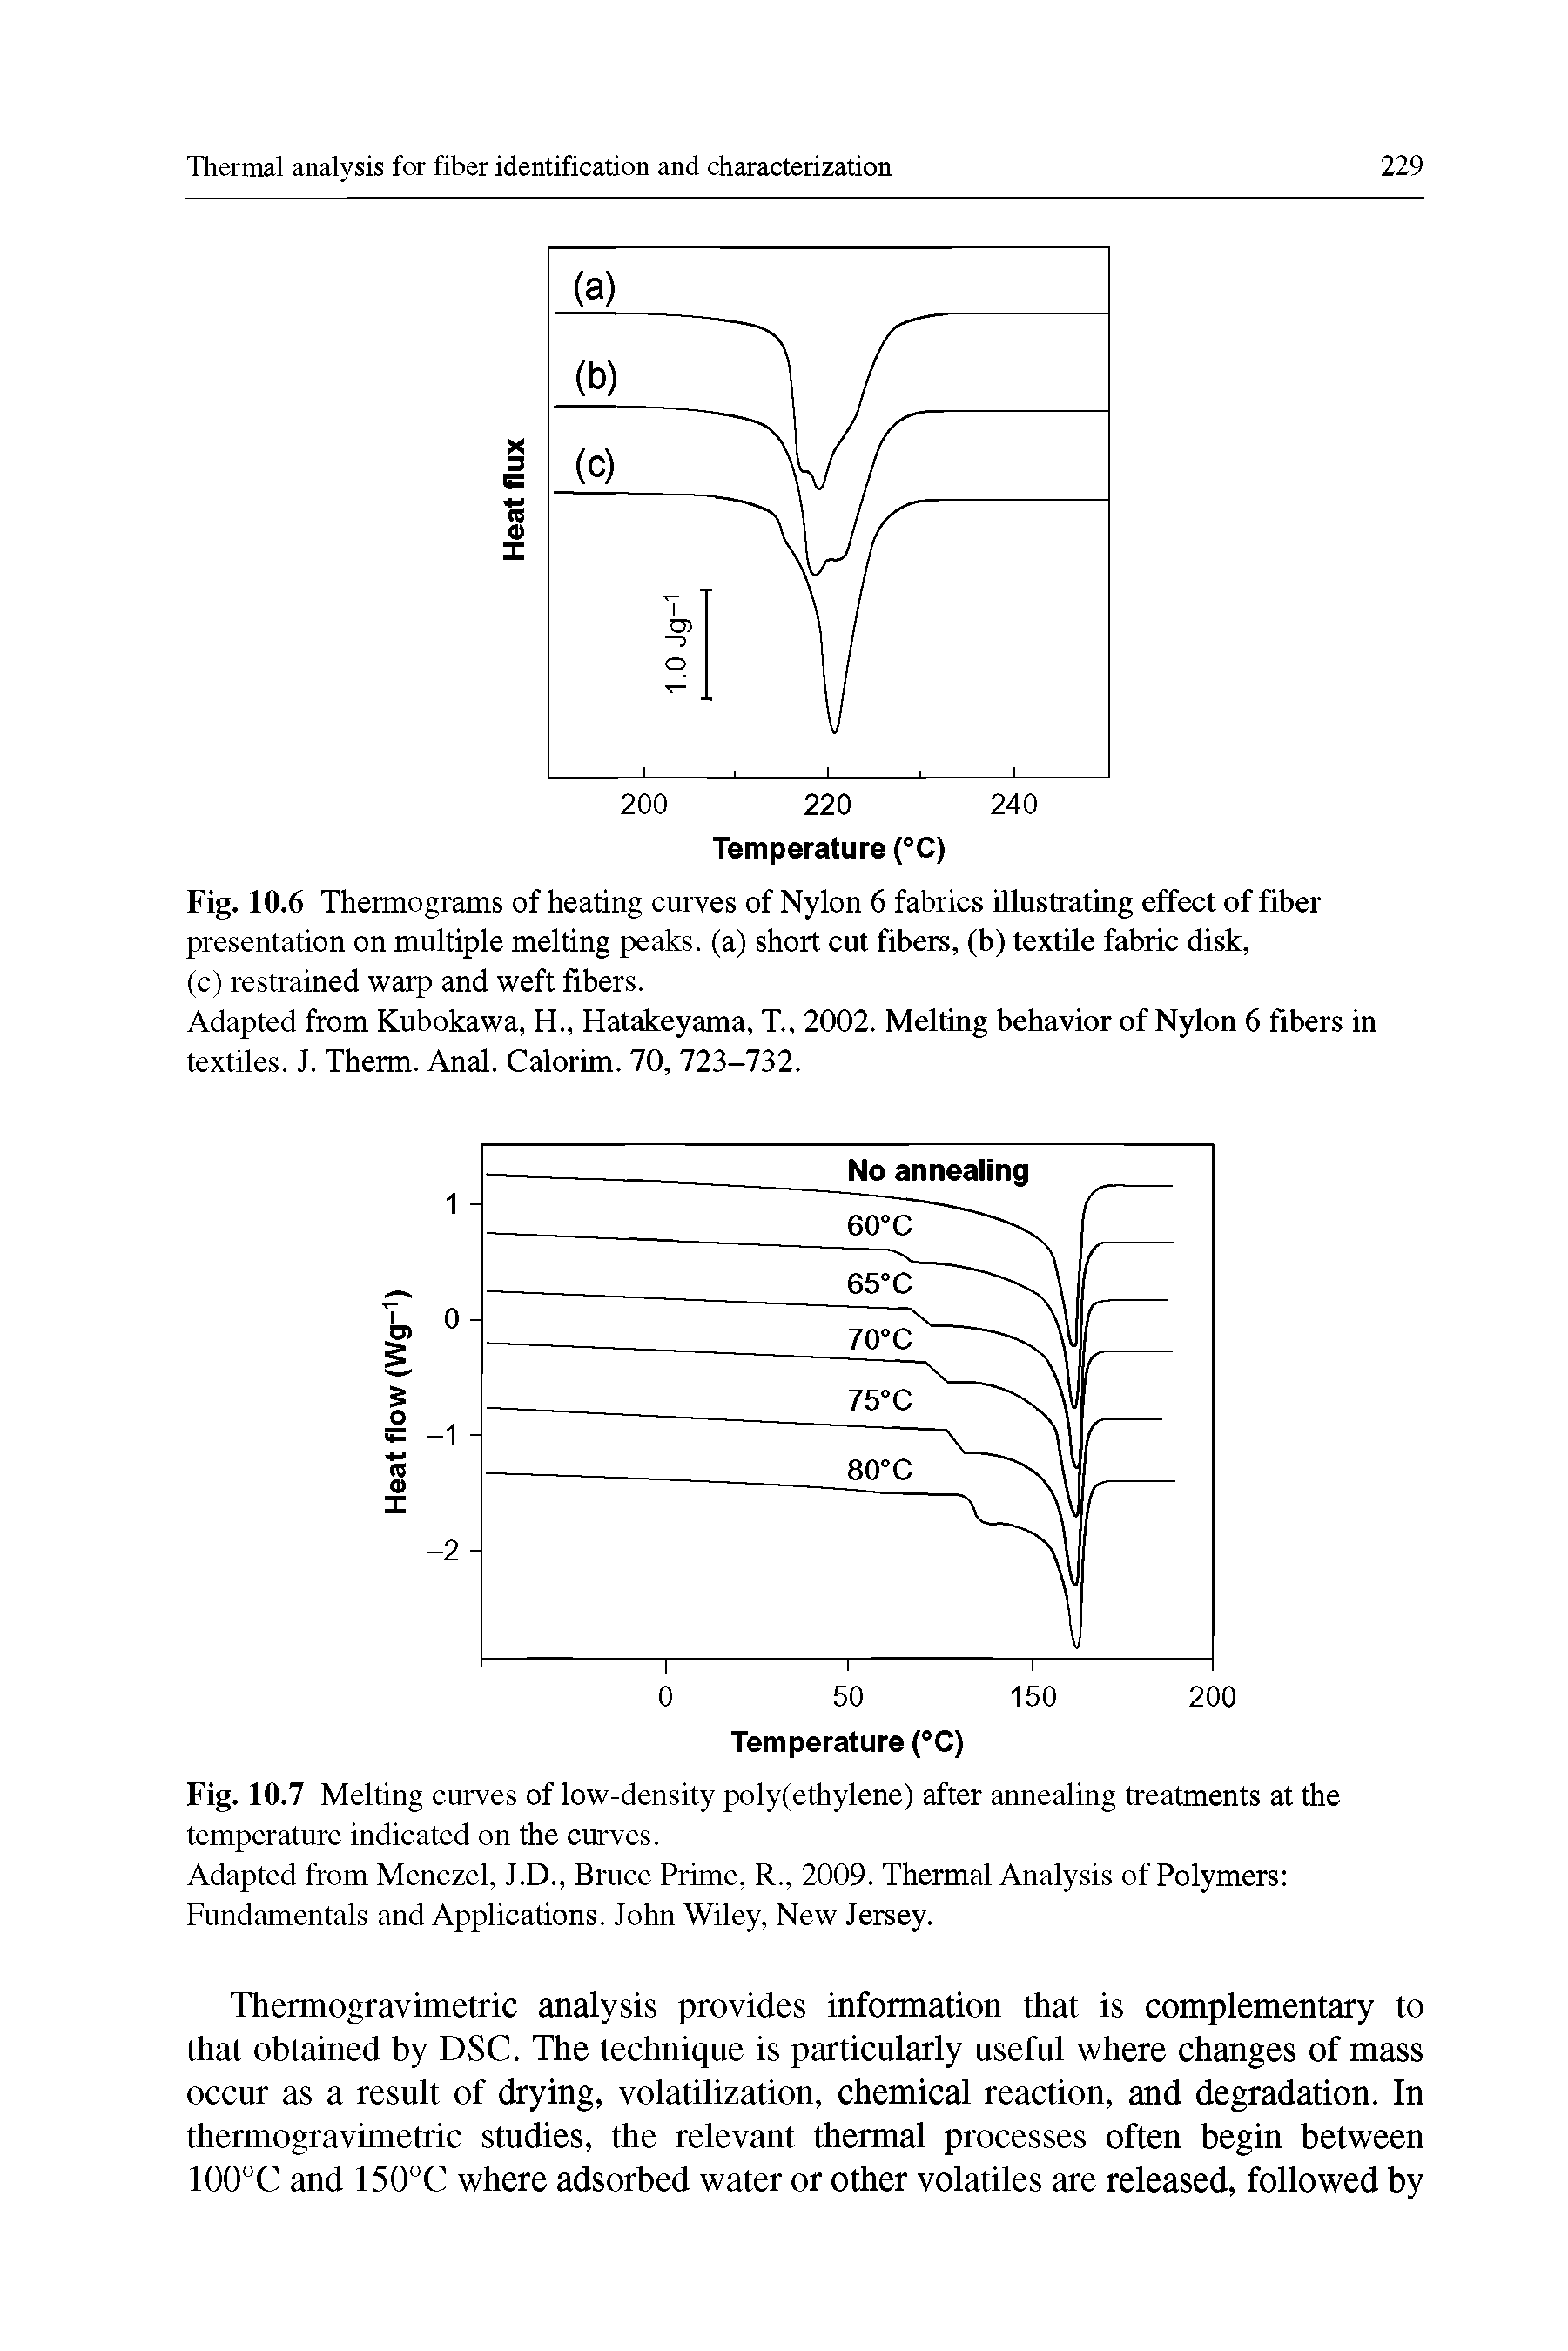 Fig. 10.6 Thermograms of heating curves of Nylon 6 fabrics illustrating effect of fiber presentation on multiple melting peaks, (a) short cut fibers, (b) textile fabric disk,...